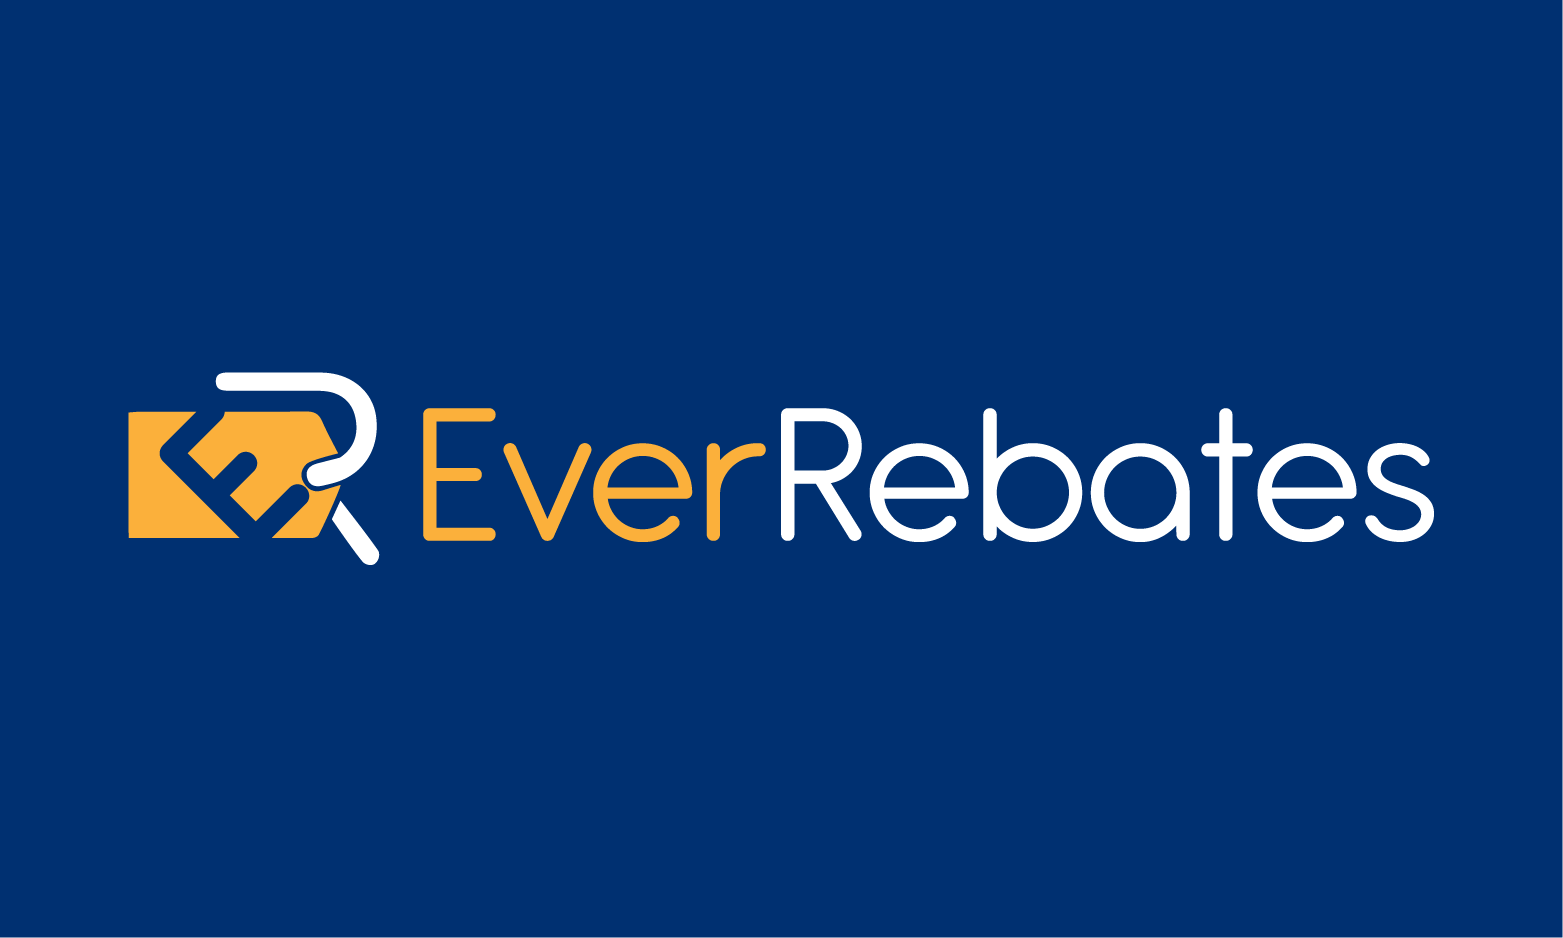 EverRebates.com - Creative brandable domain for sale